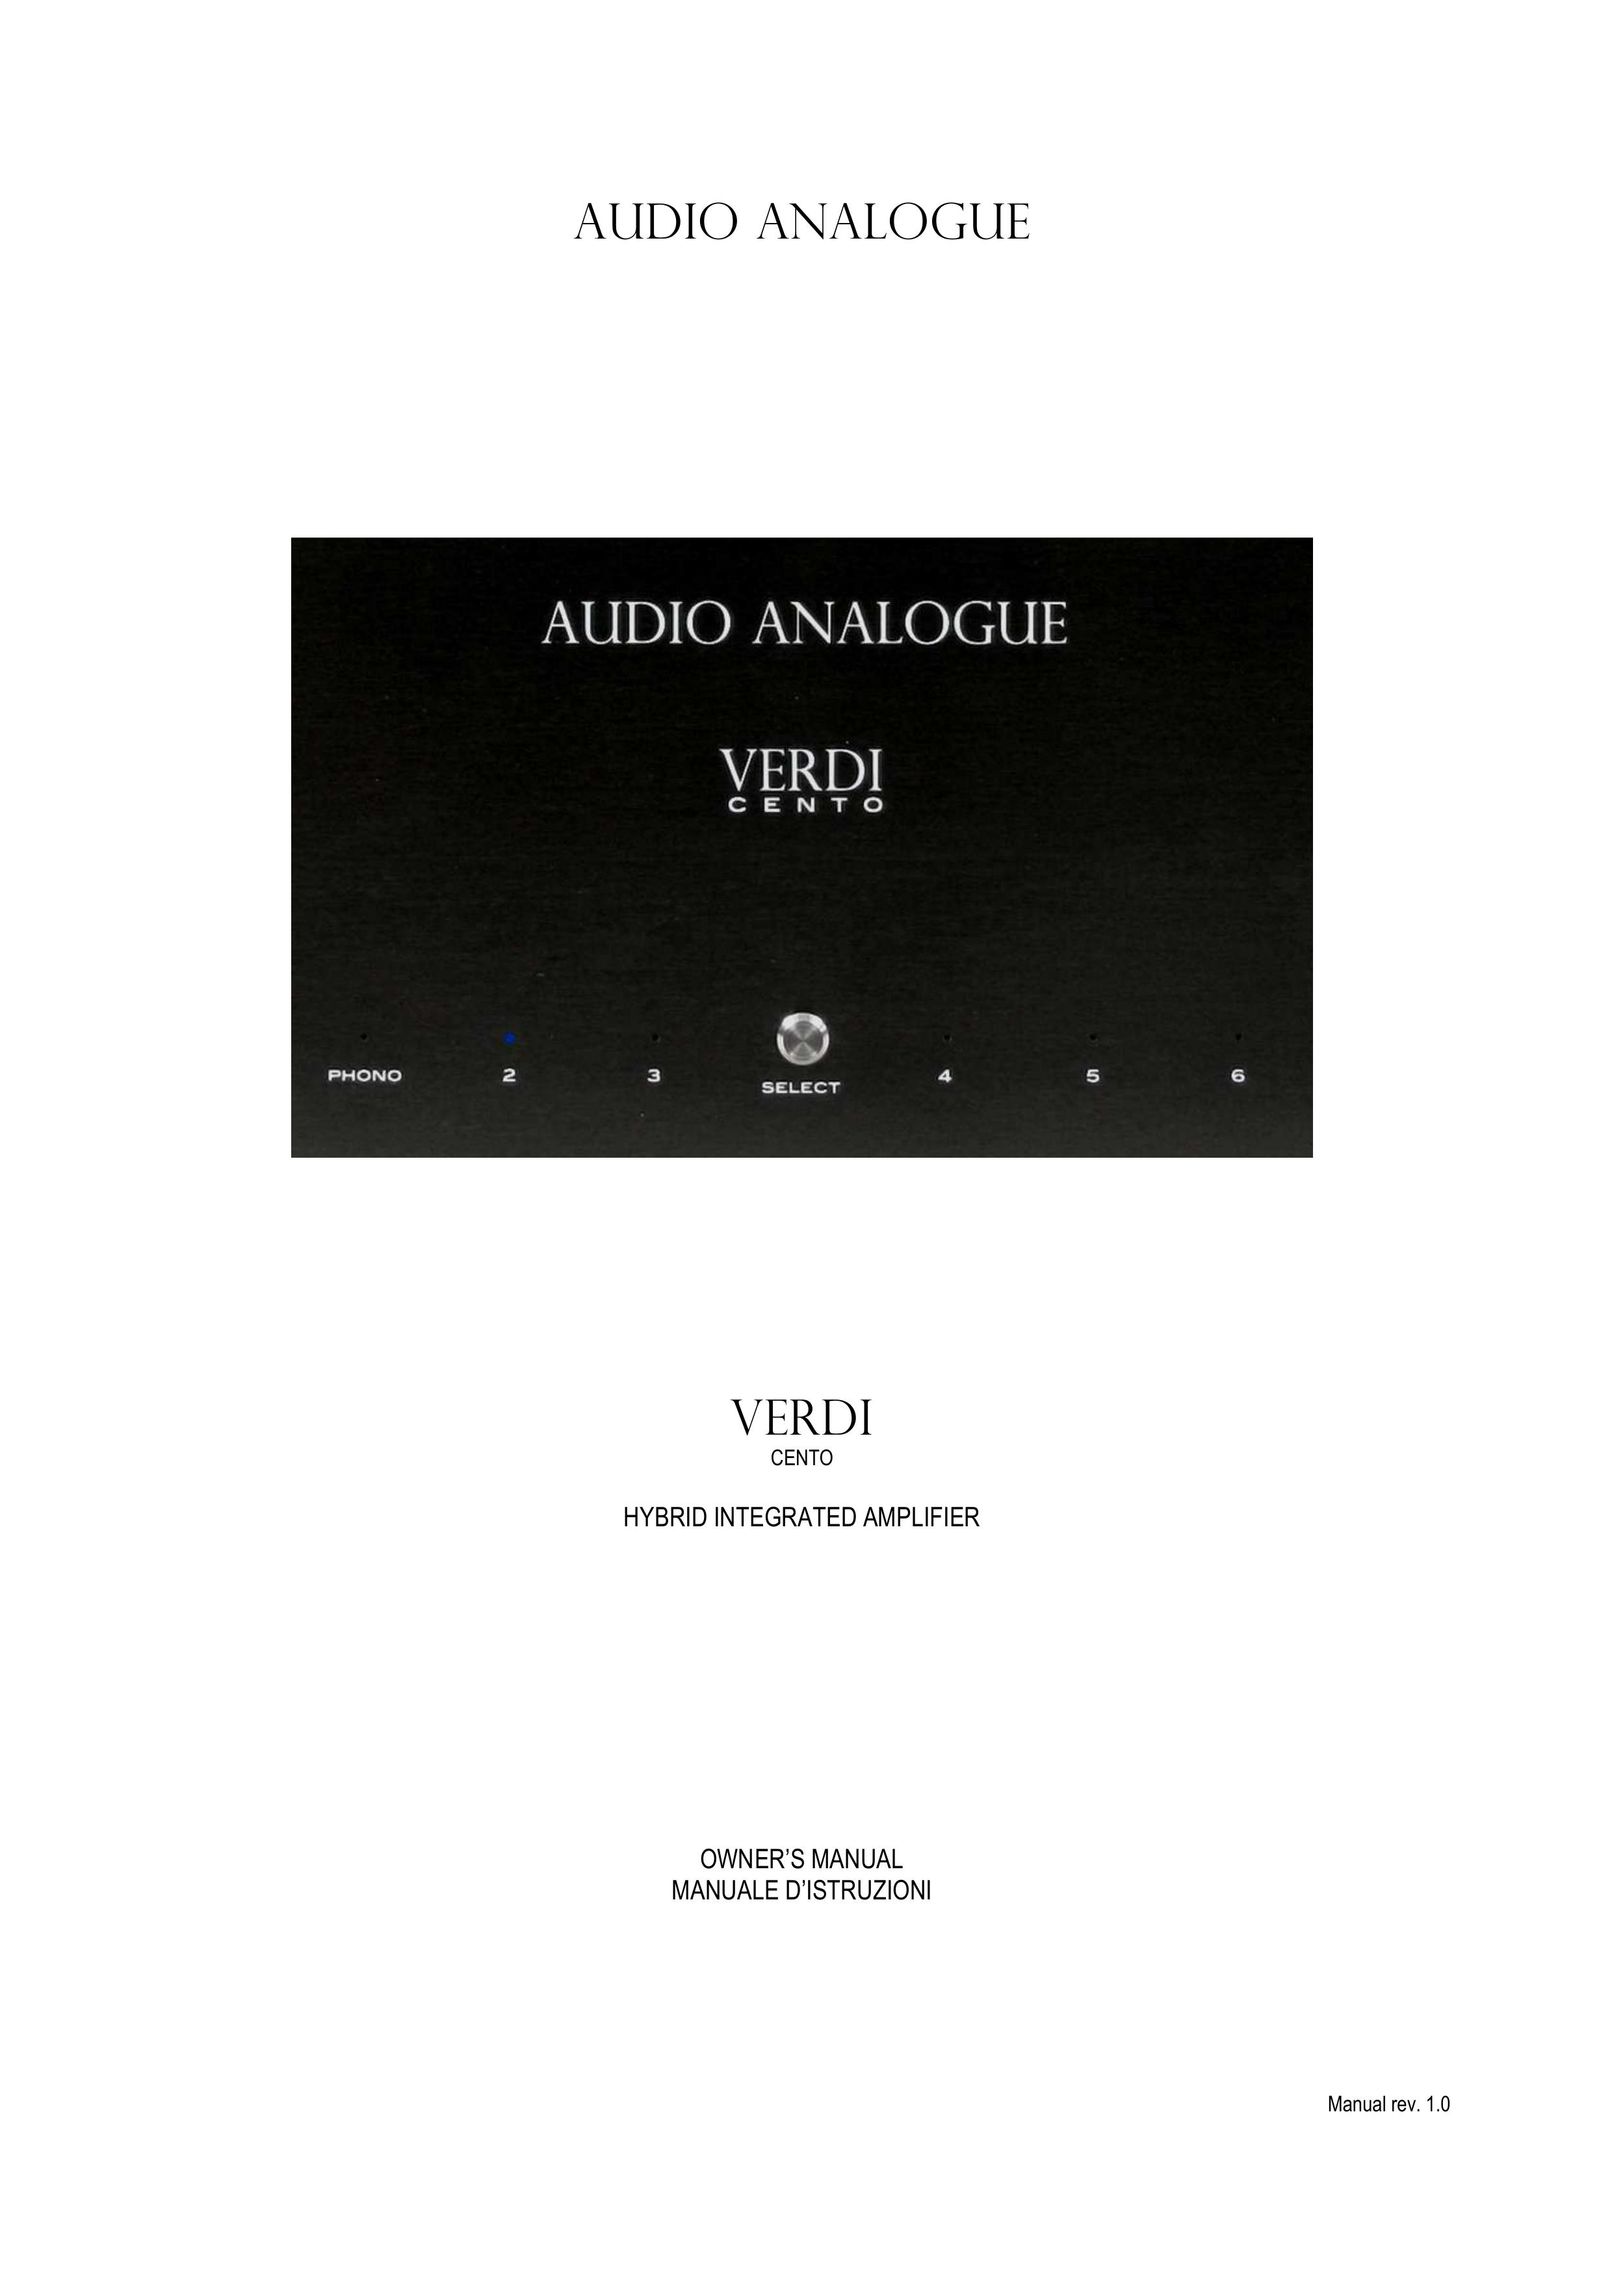 Audio Analogue SRL Verdi Cento Stereo Amplifier User Manual